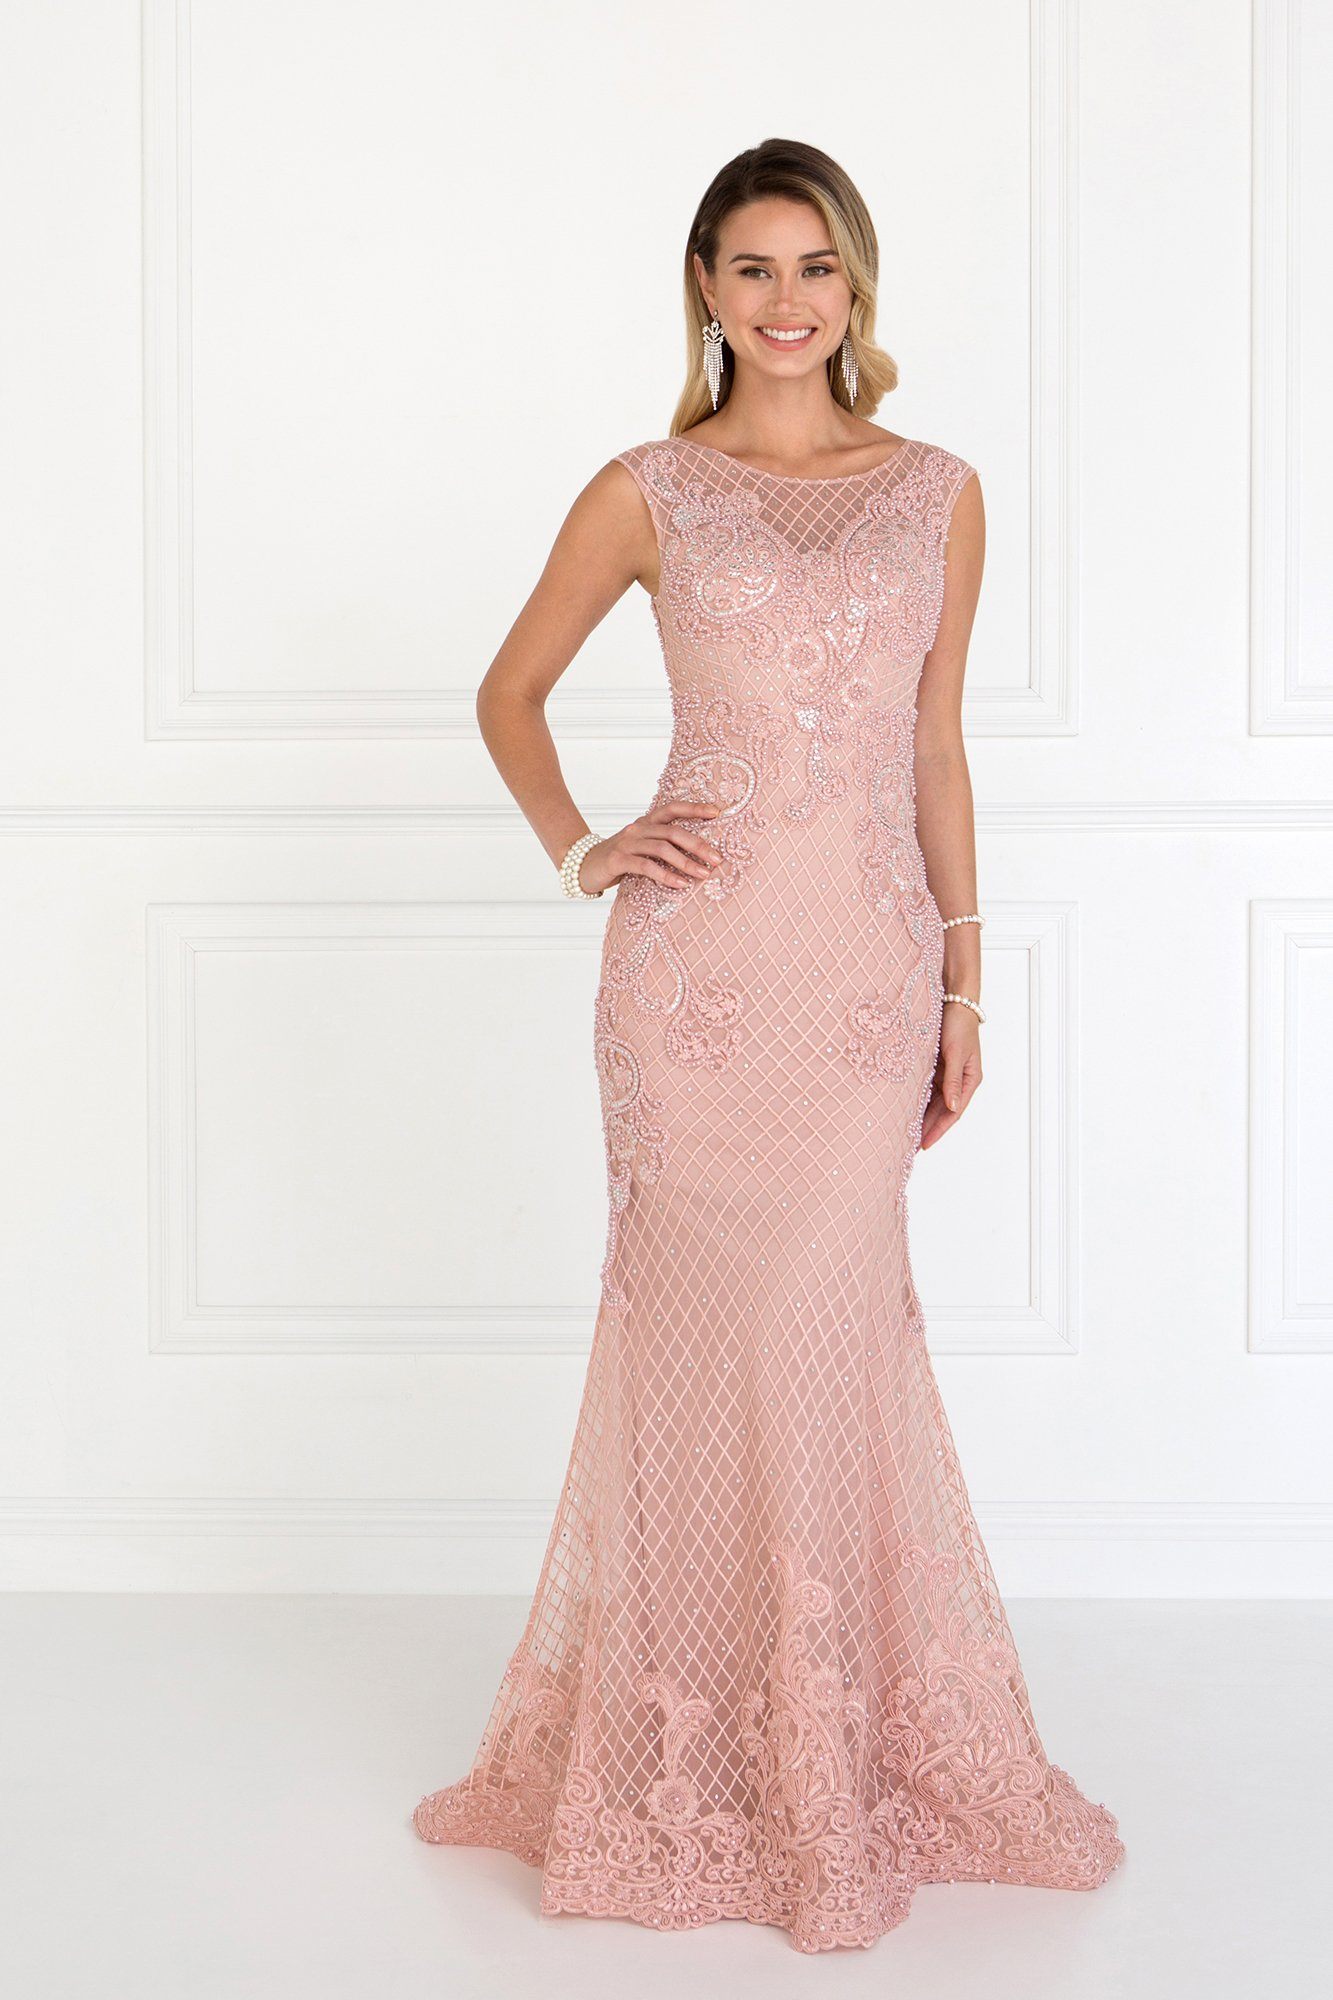 elegant fancy dresses